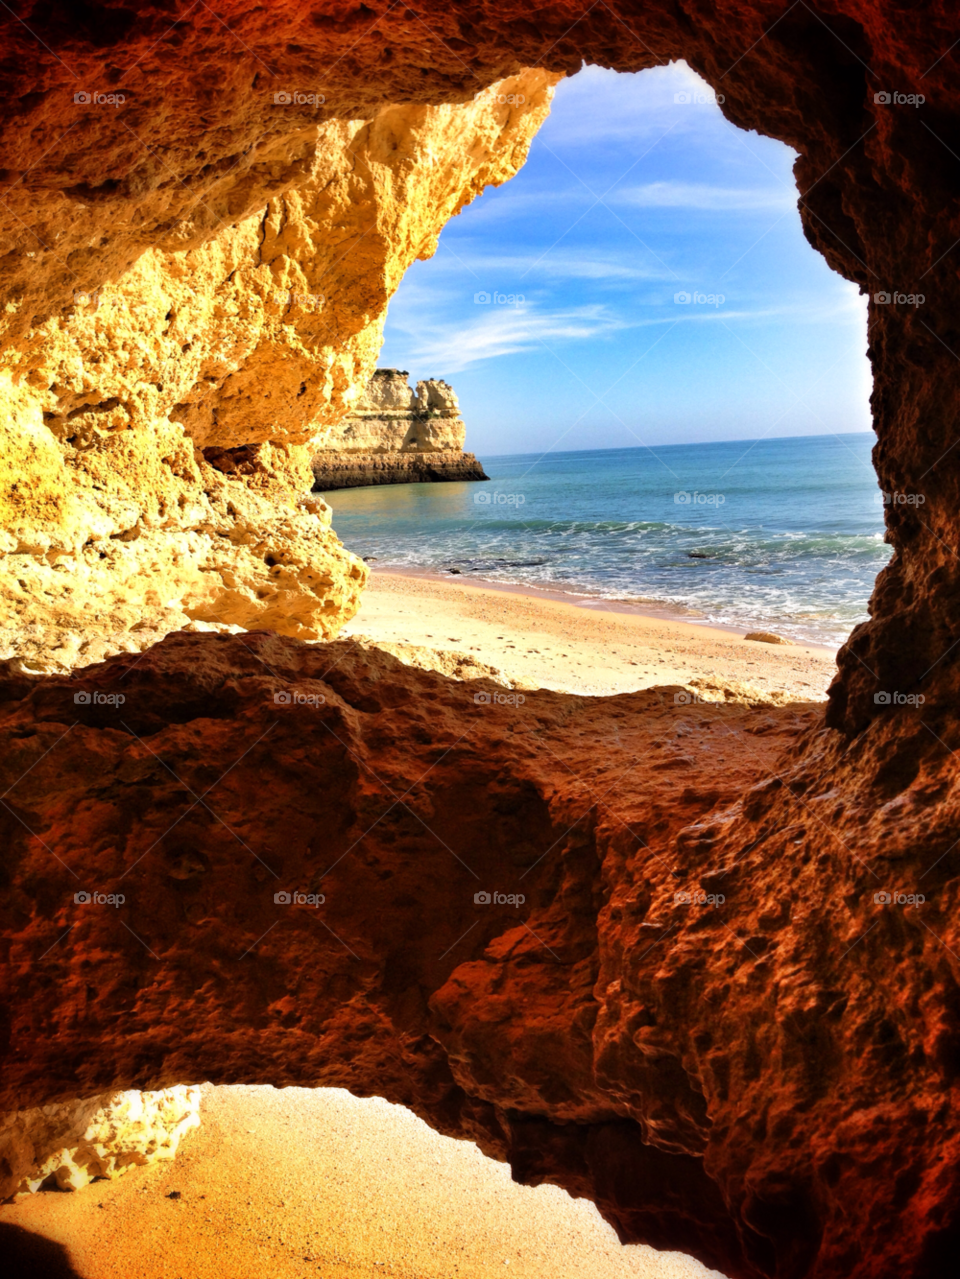 beach cave cliffs algarve by ponchokid